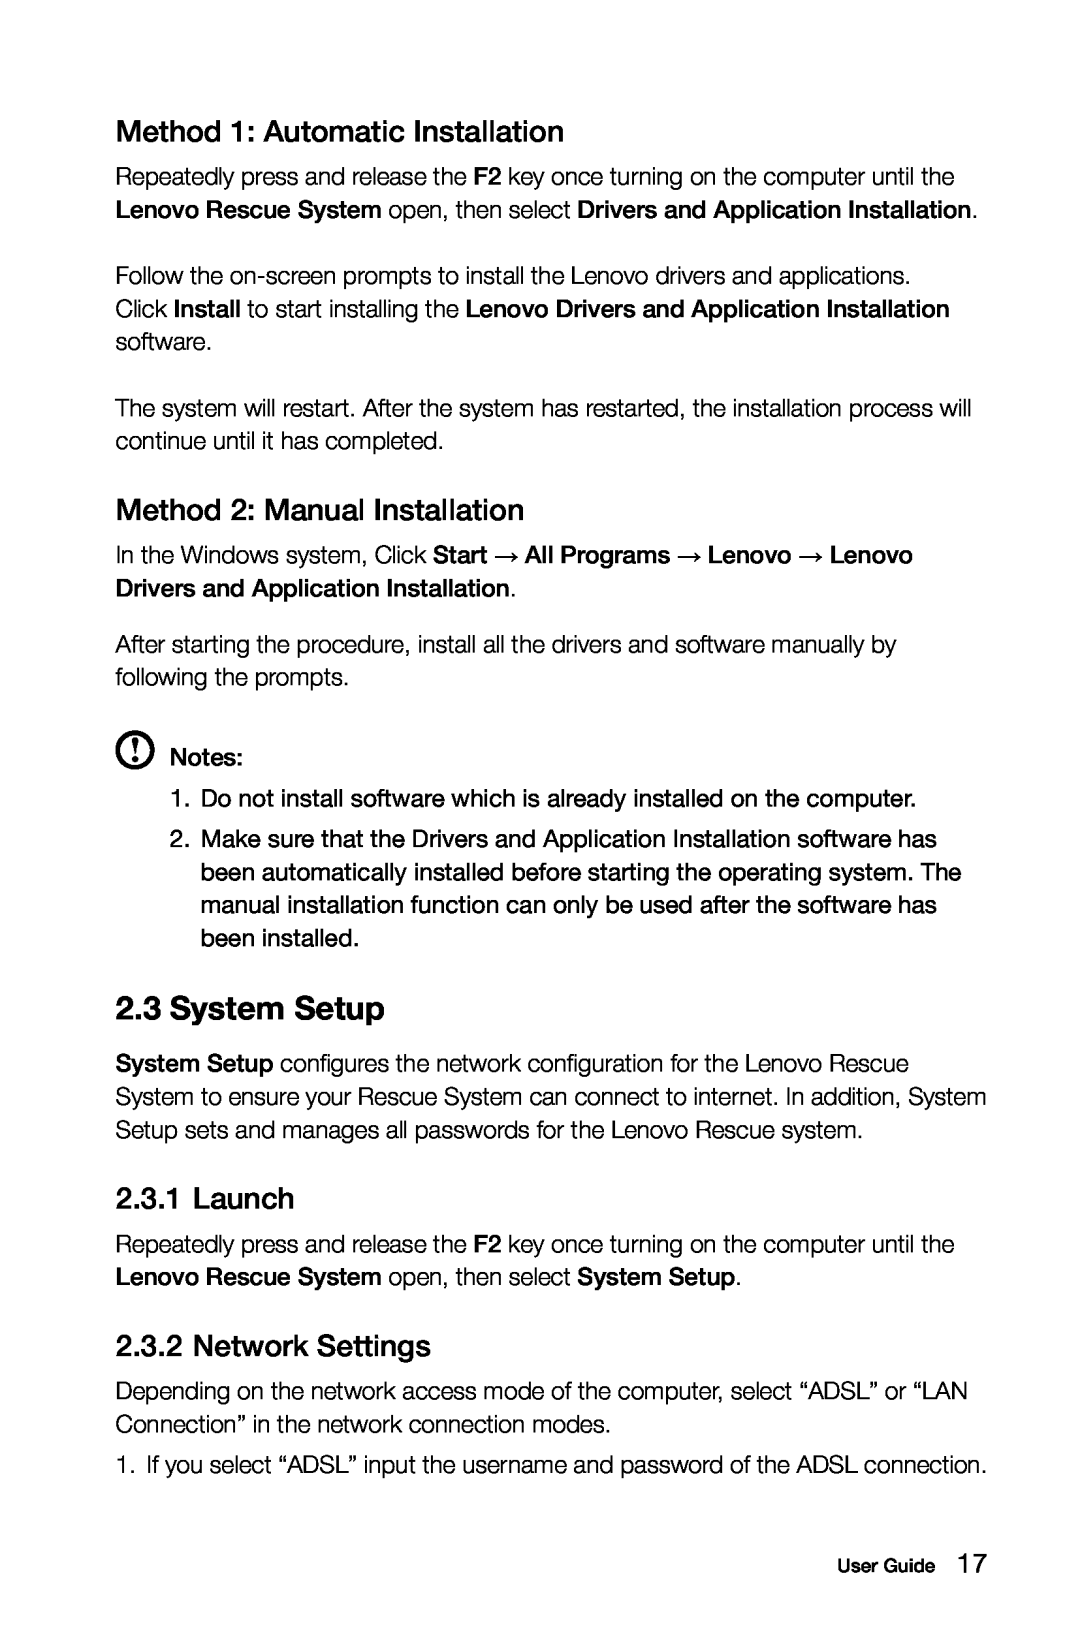 Lenovo 10060/7724 System Setup, Method 1 Automatic Installation, Method 2 Manual Installation, Launch, Network Settings 